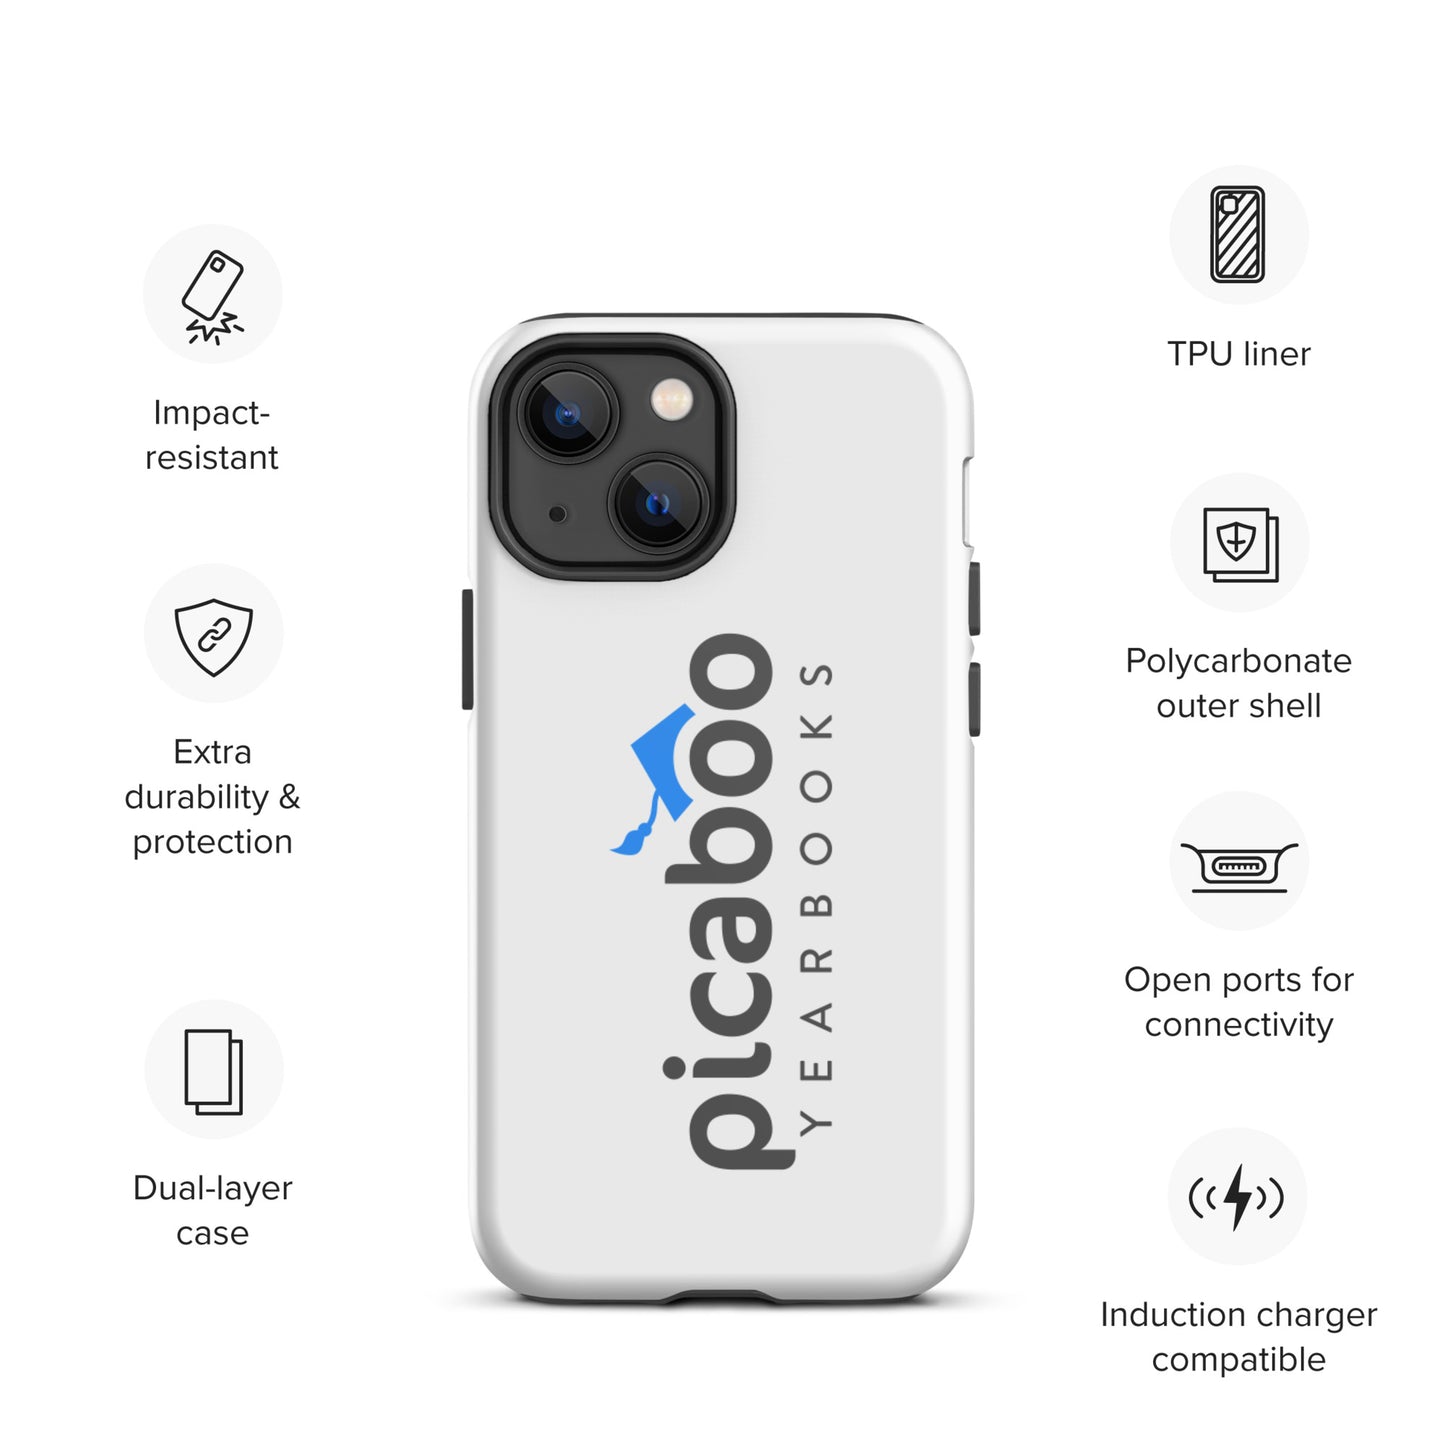 Picaboo Tough iPhone Case